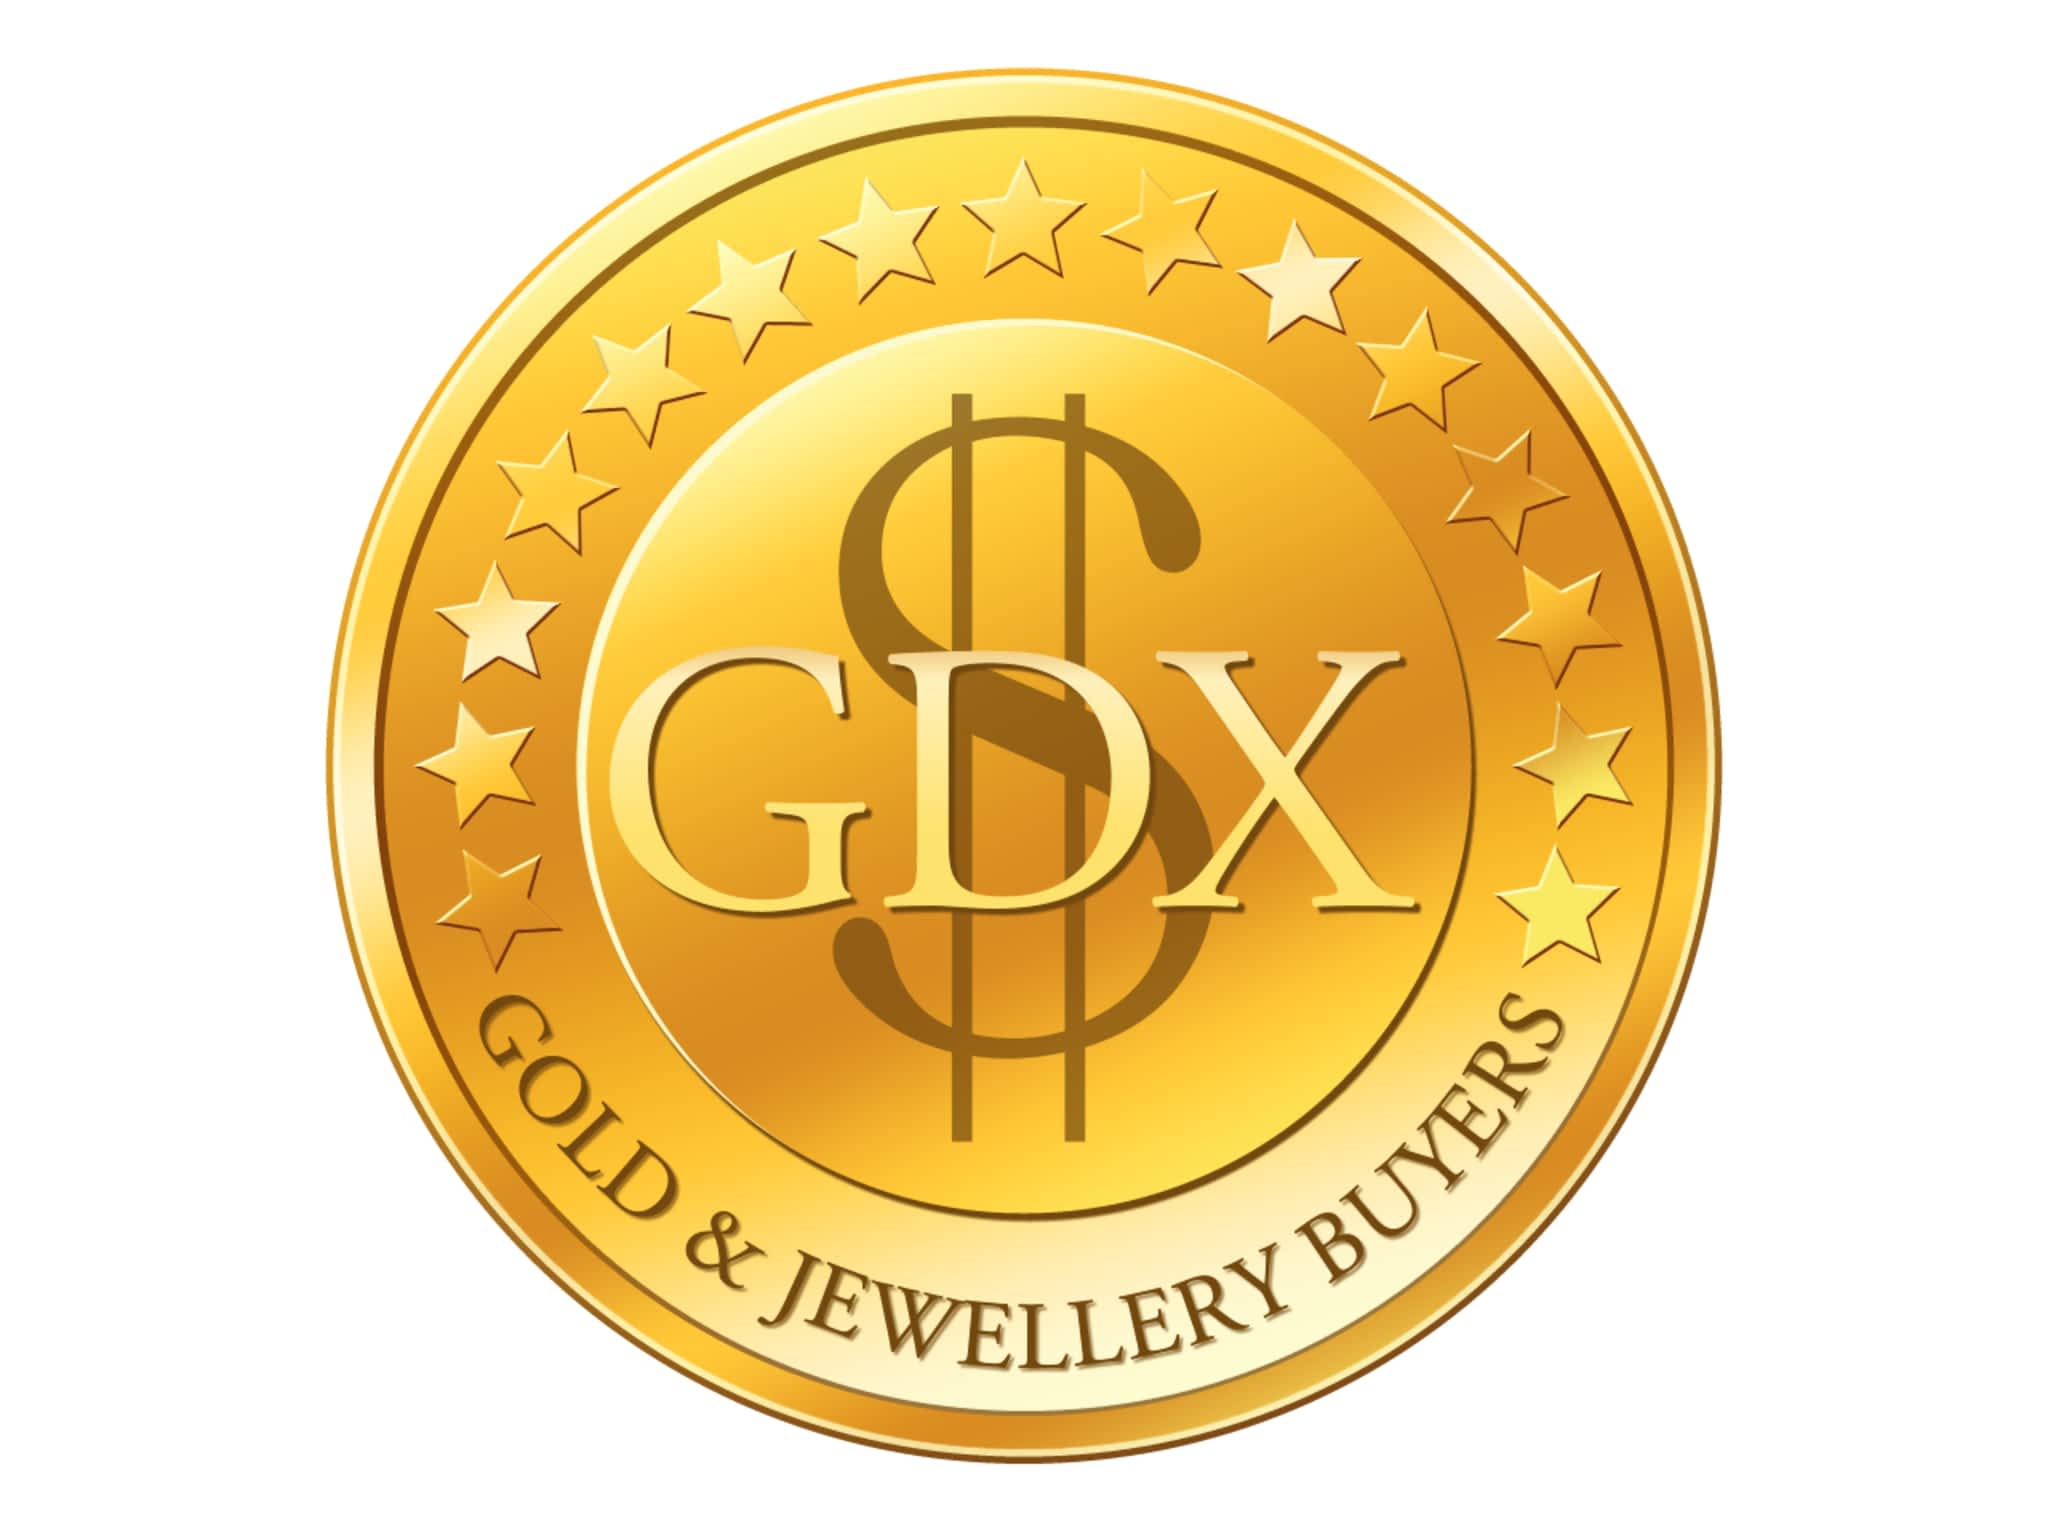 photo Gold Dollar Exchange Gold & Jewellery Buyers